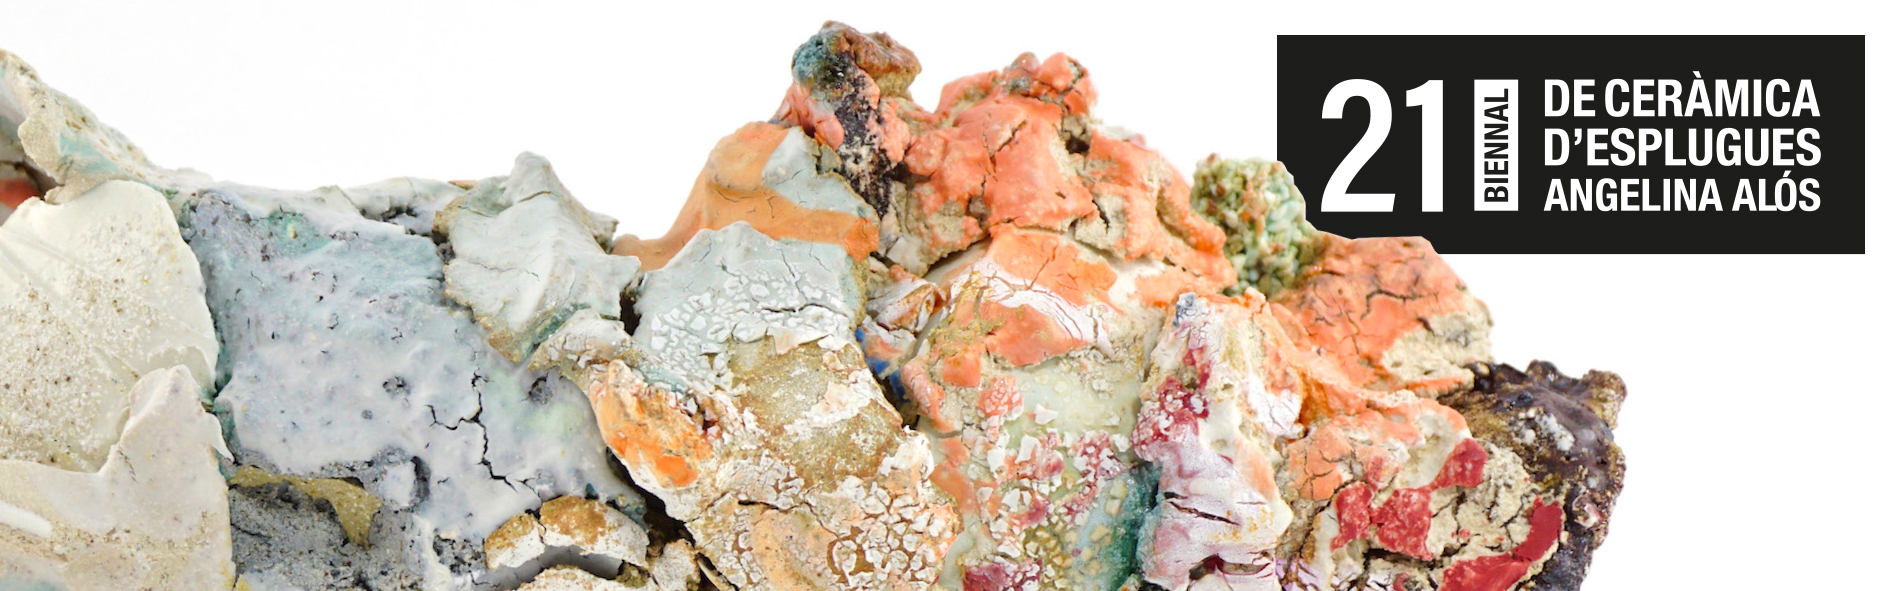 21 Bienal de cerámica de Esplugues Angelina Alós